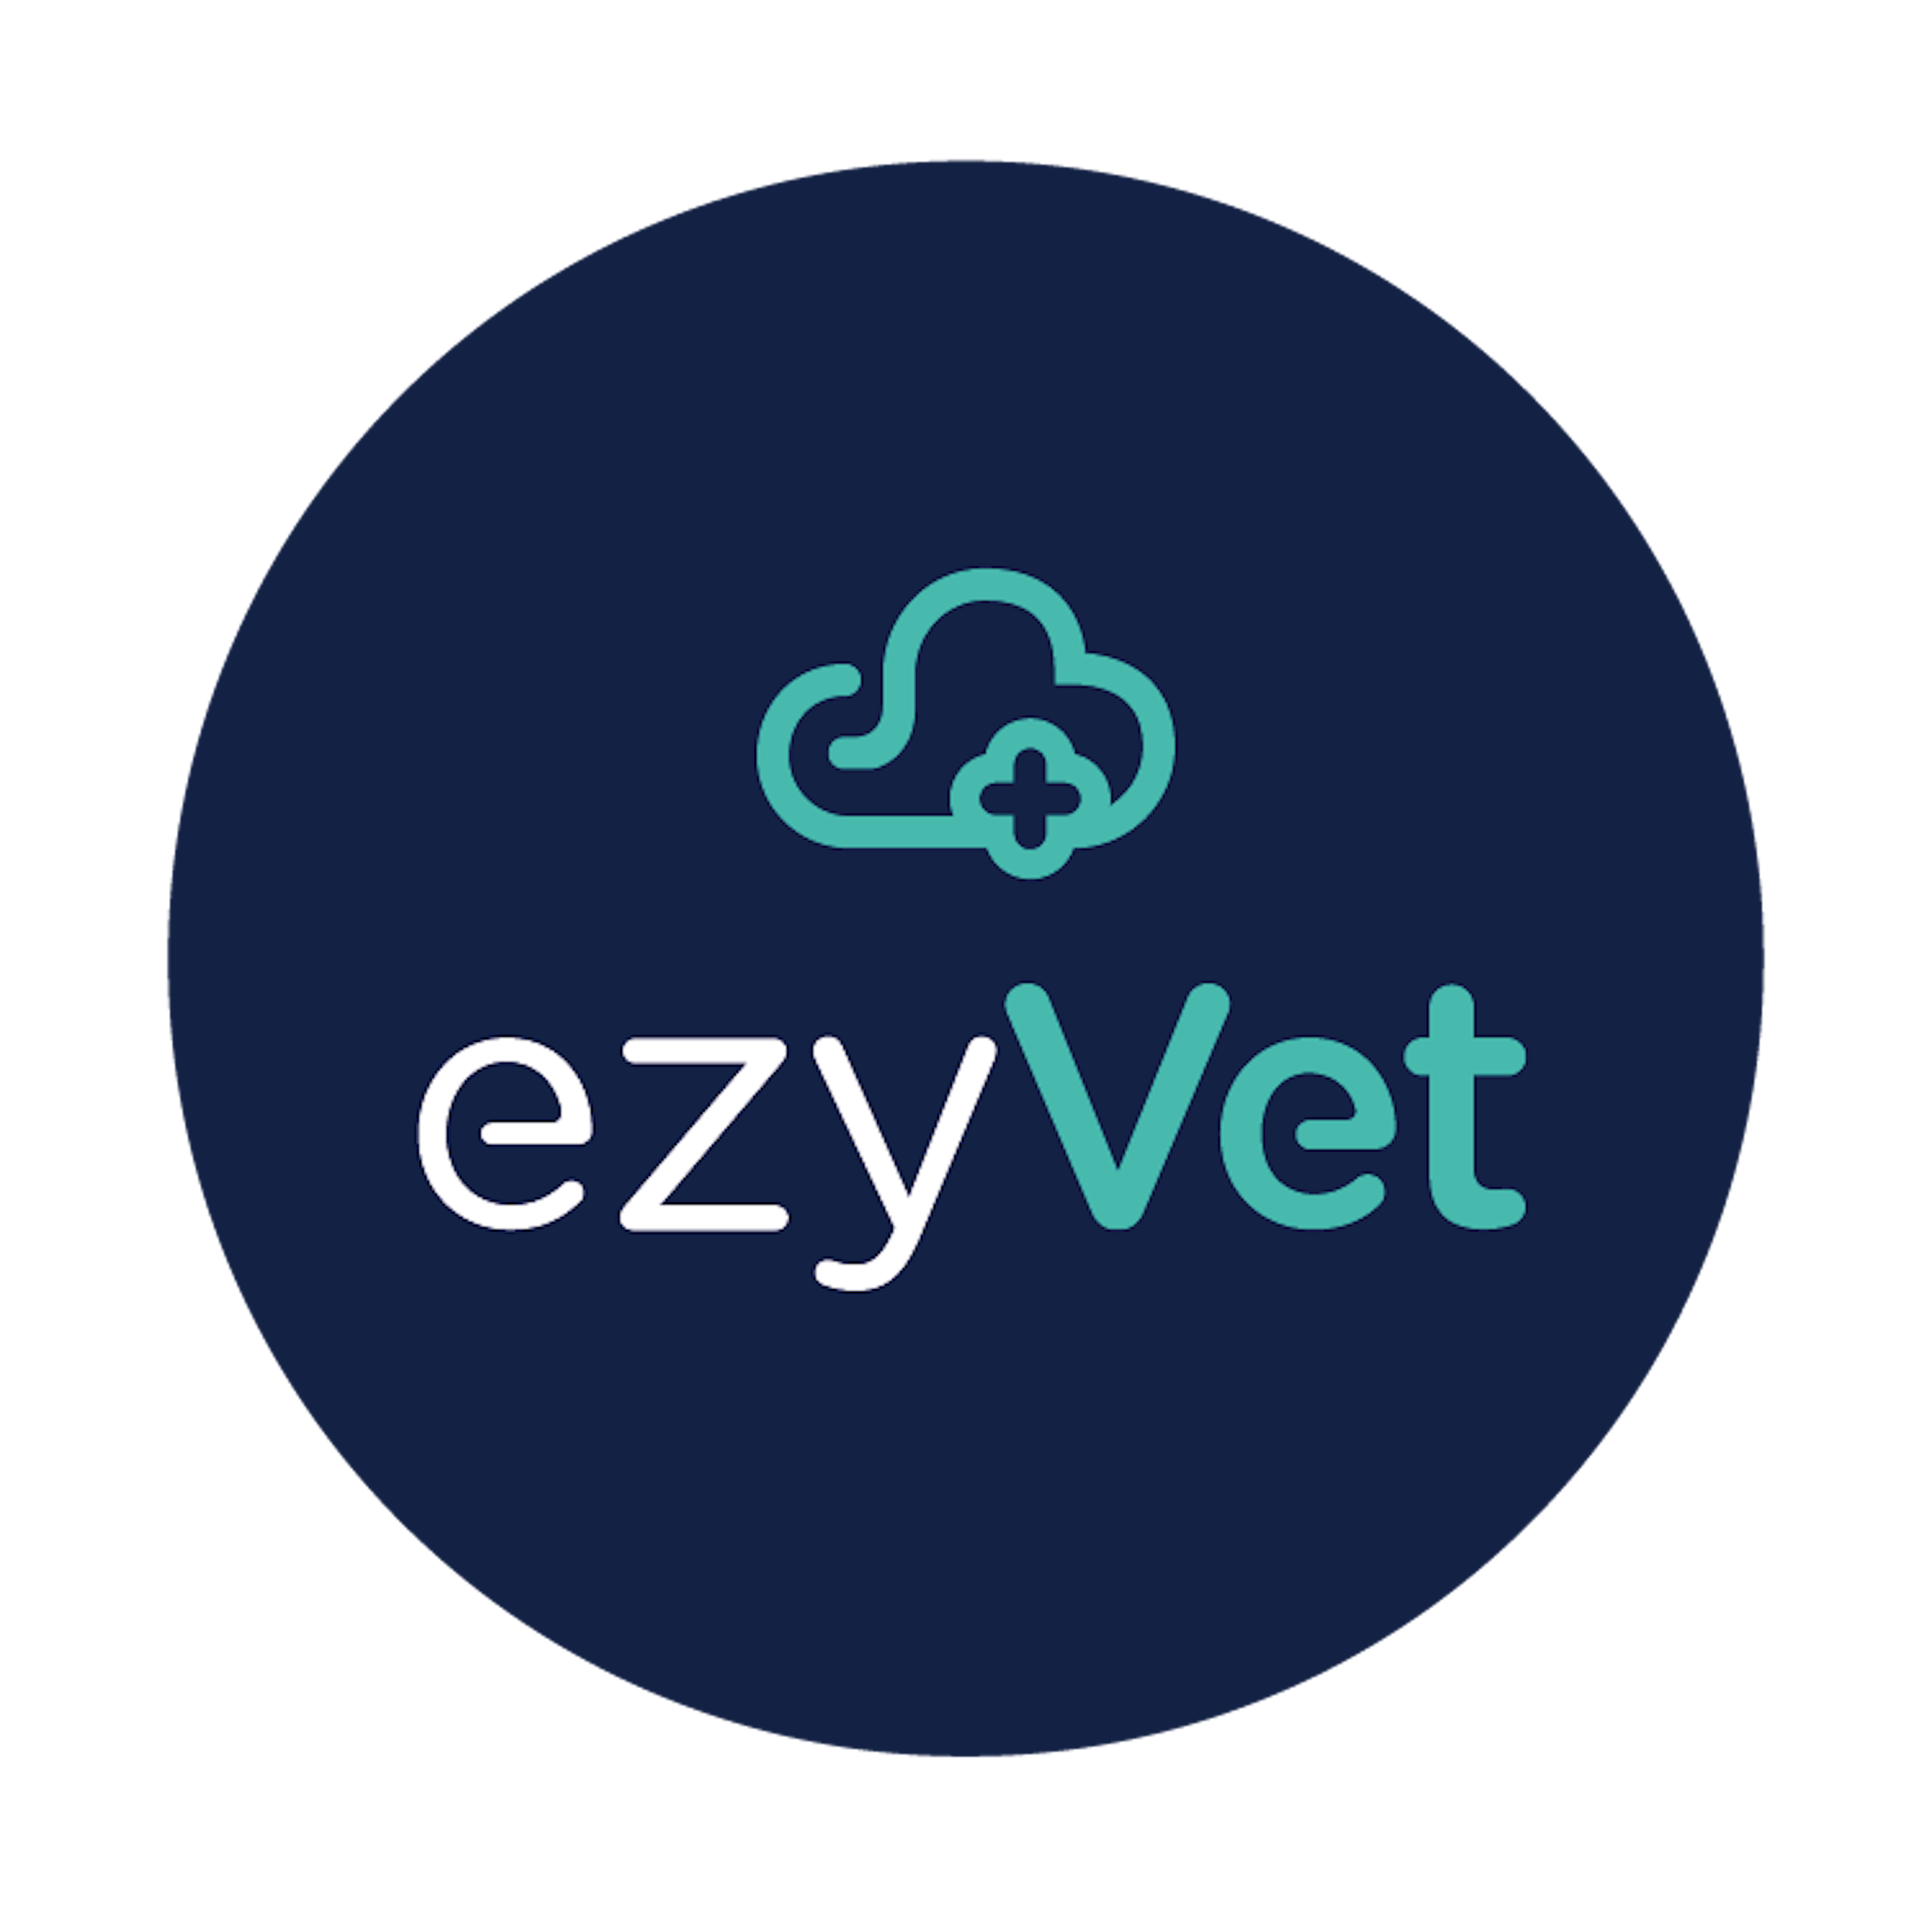 ezyVet Logo